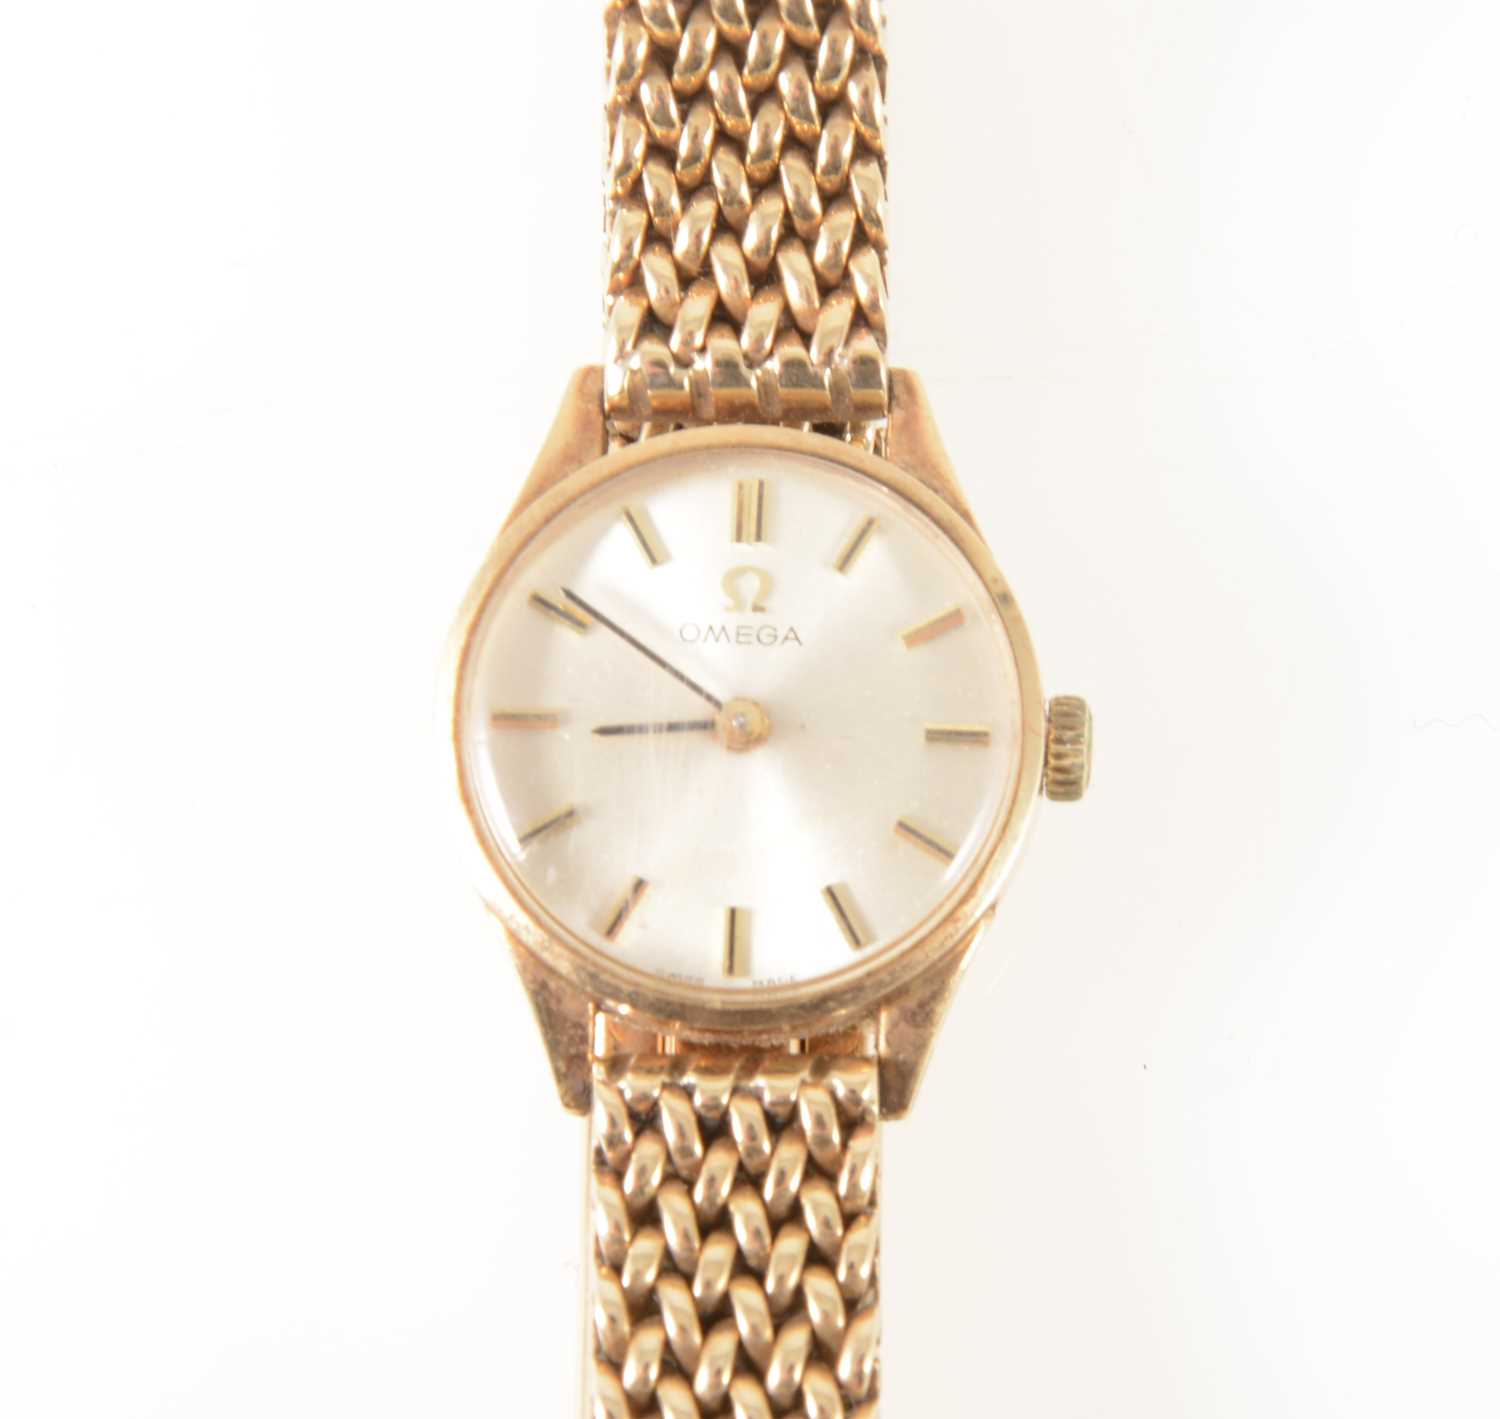 Lot 152 - Omega - a lady's 9 carat yellow gold bracelet watch.